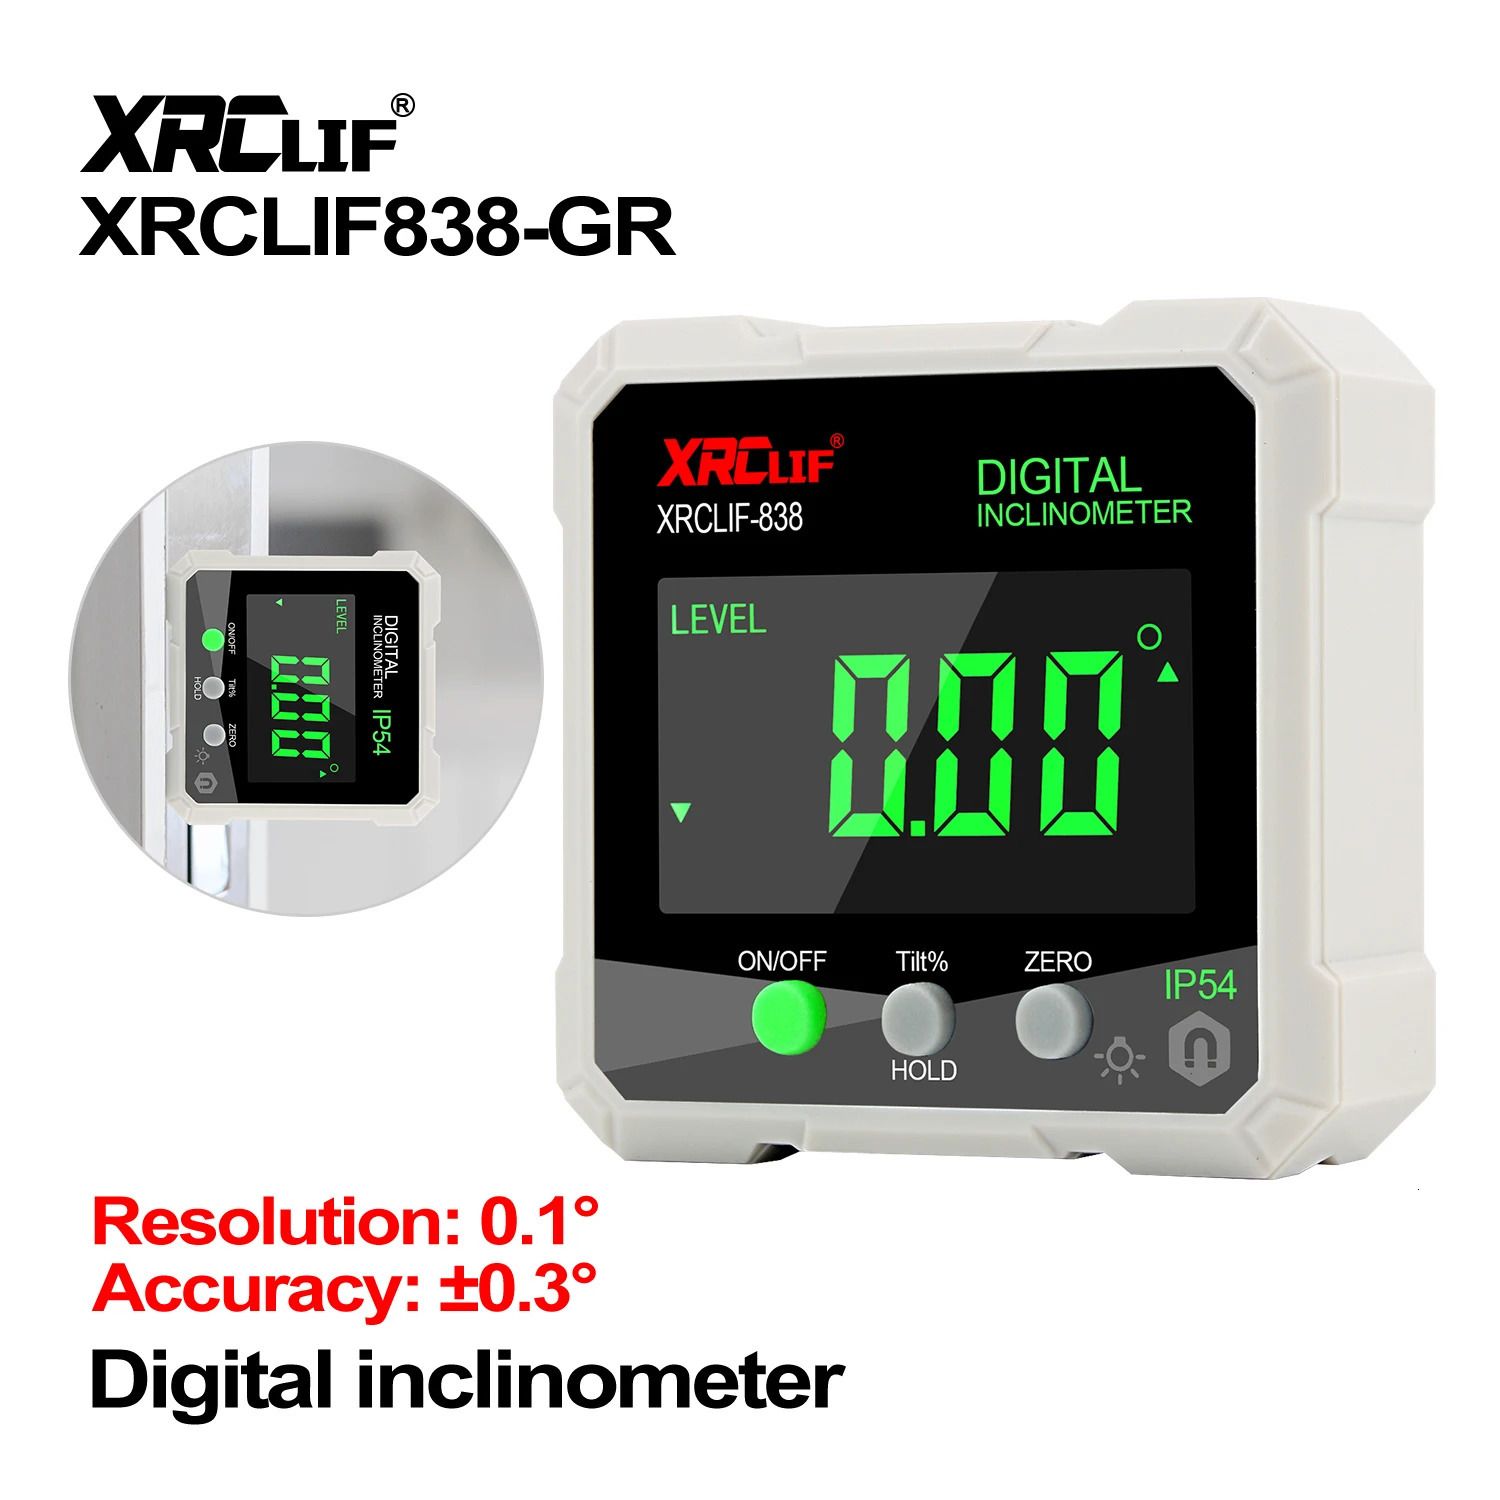 XRCLIF-838-GR